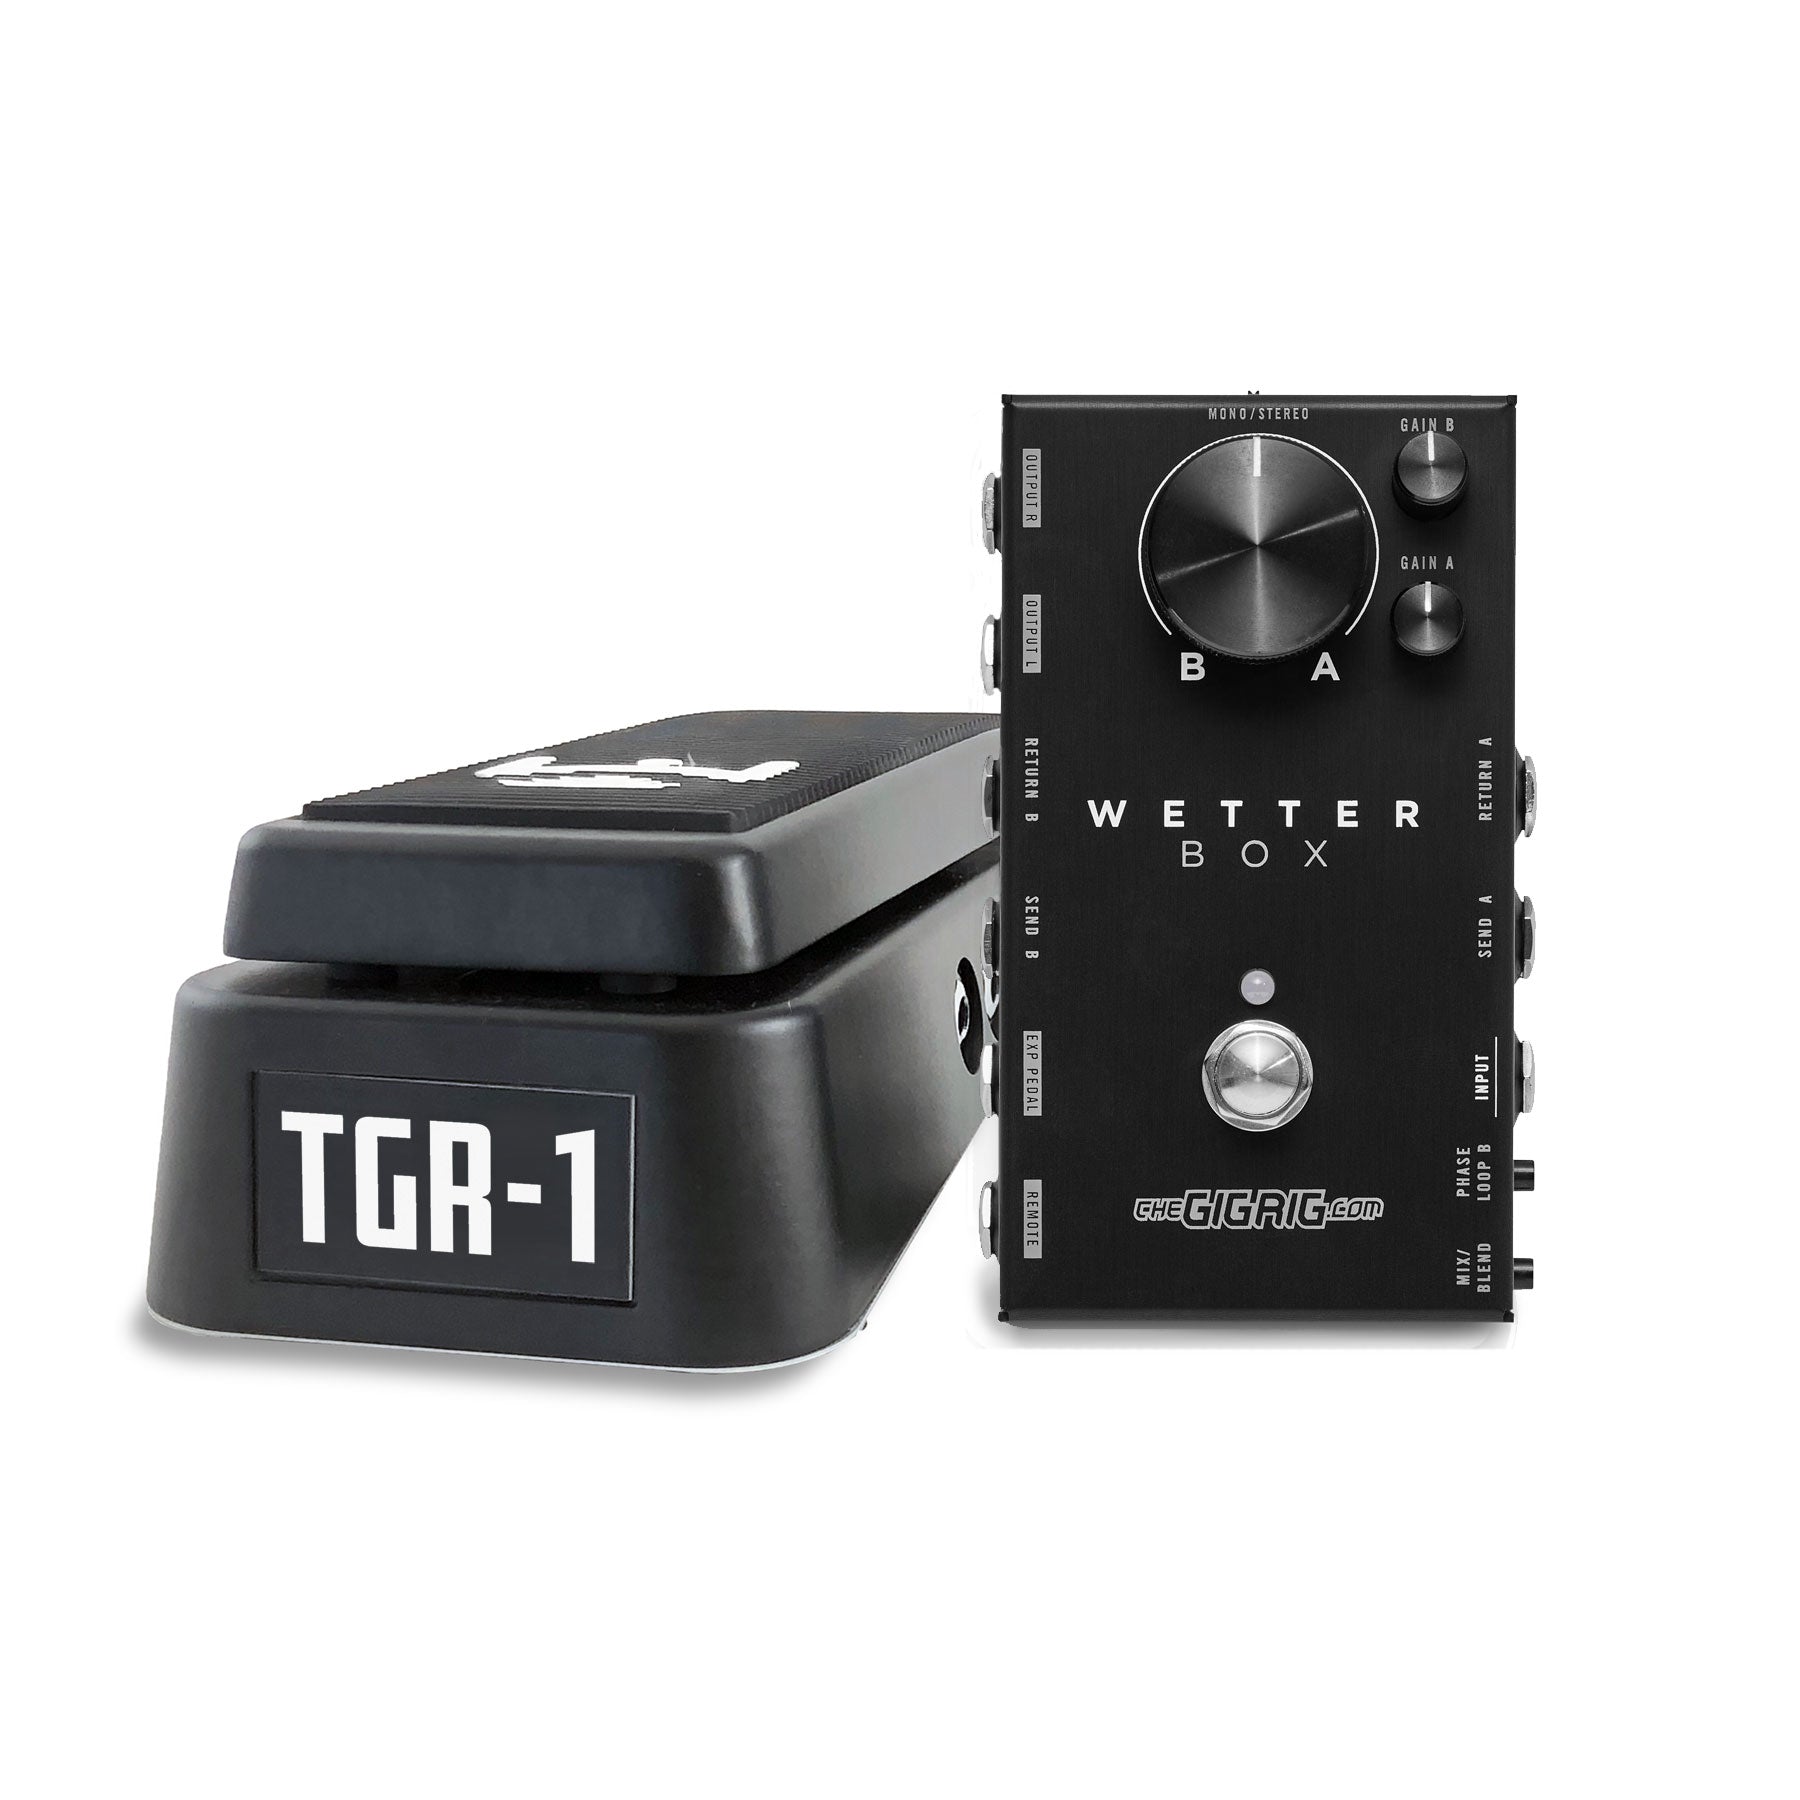 The GigRig Wetter Box / TGR- 1 Expression Bundle